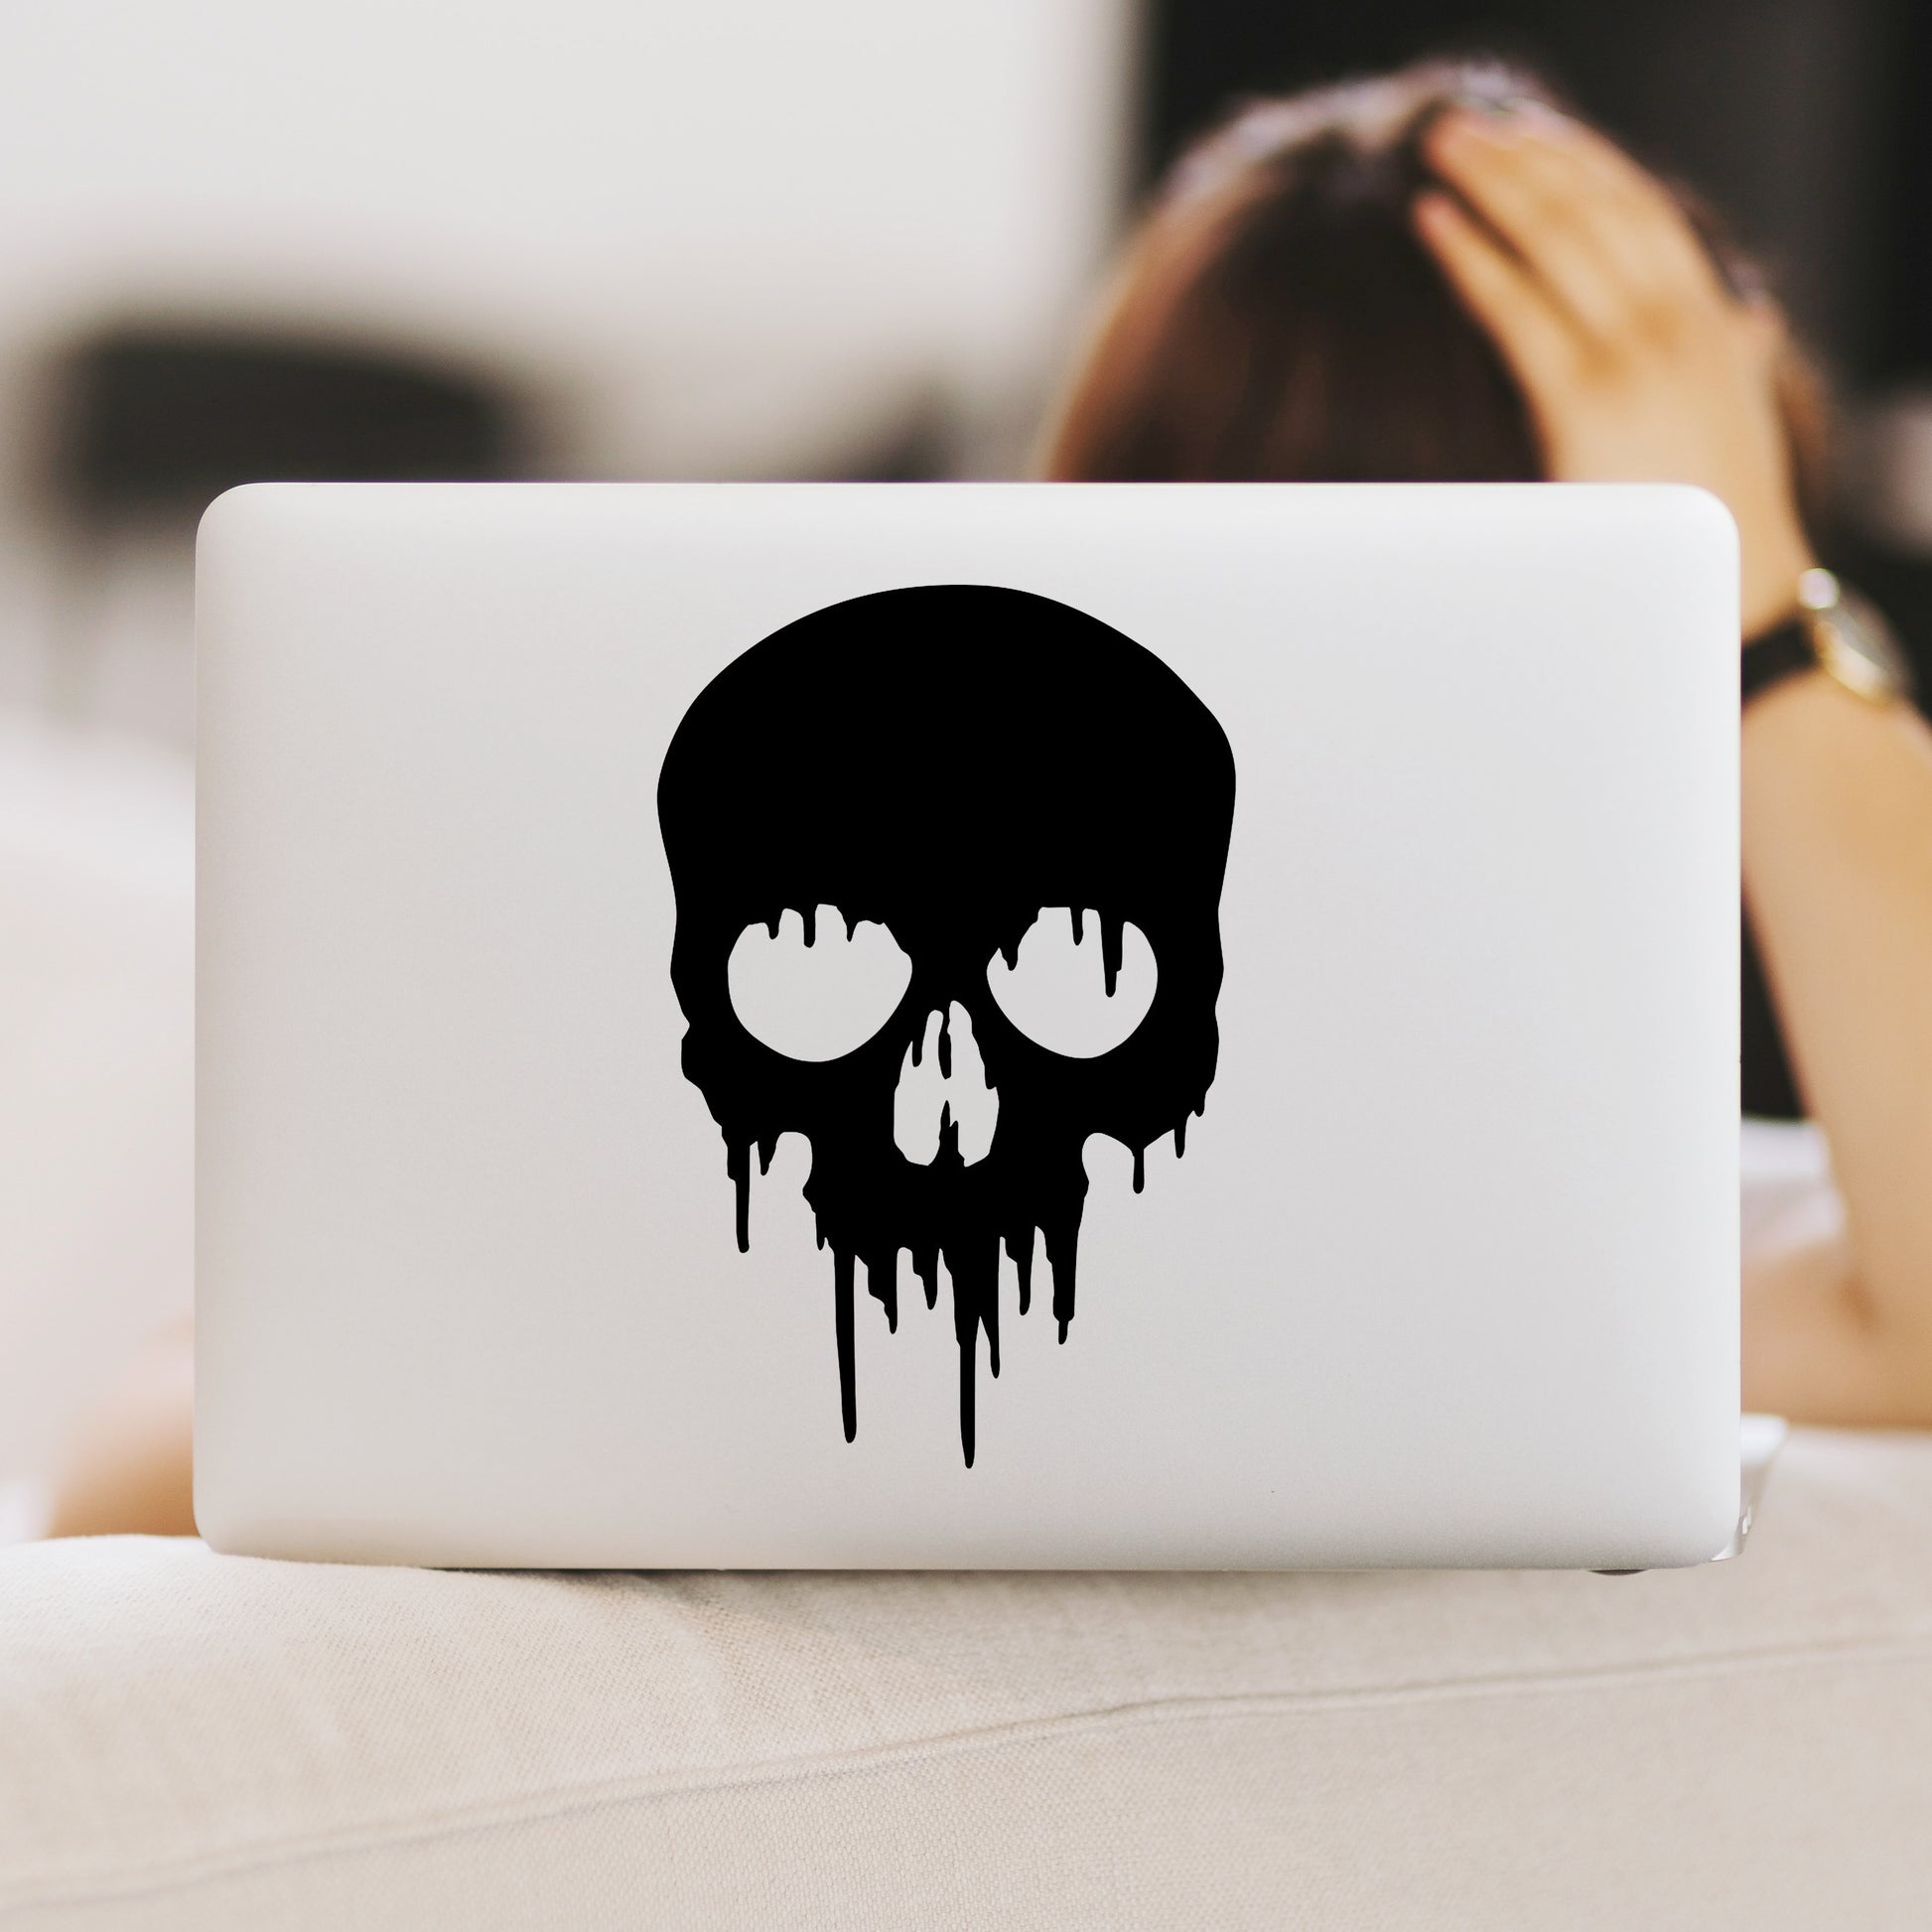 Dripping skull laptop vinyl decal sticker.